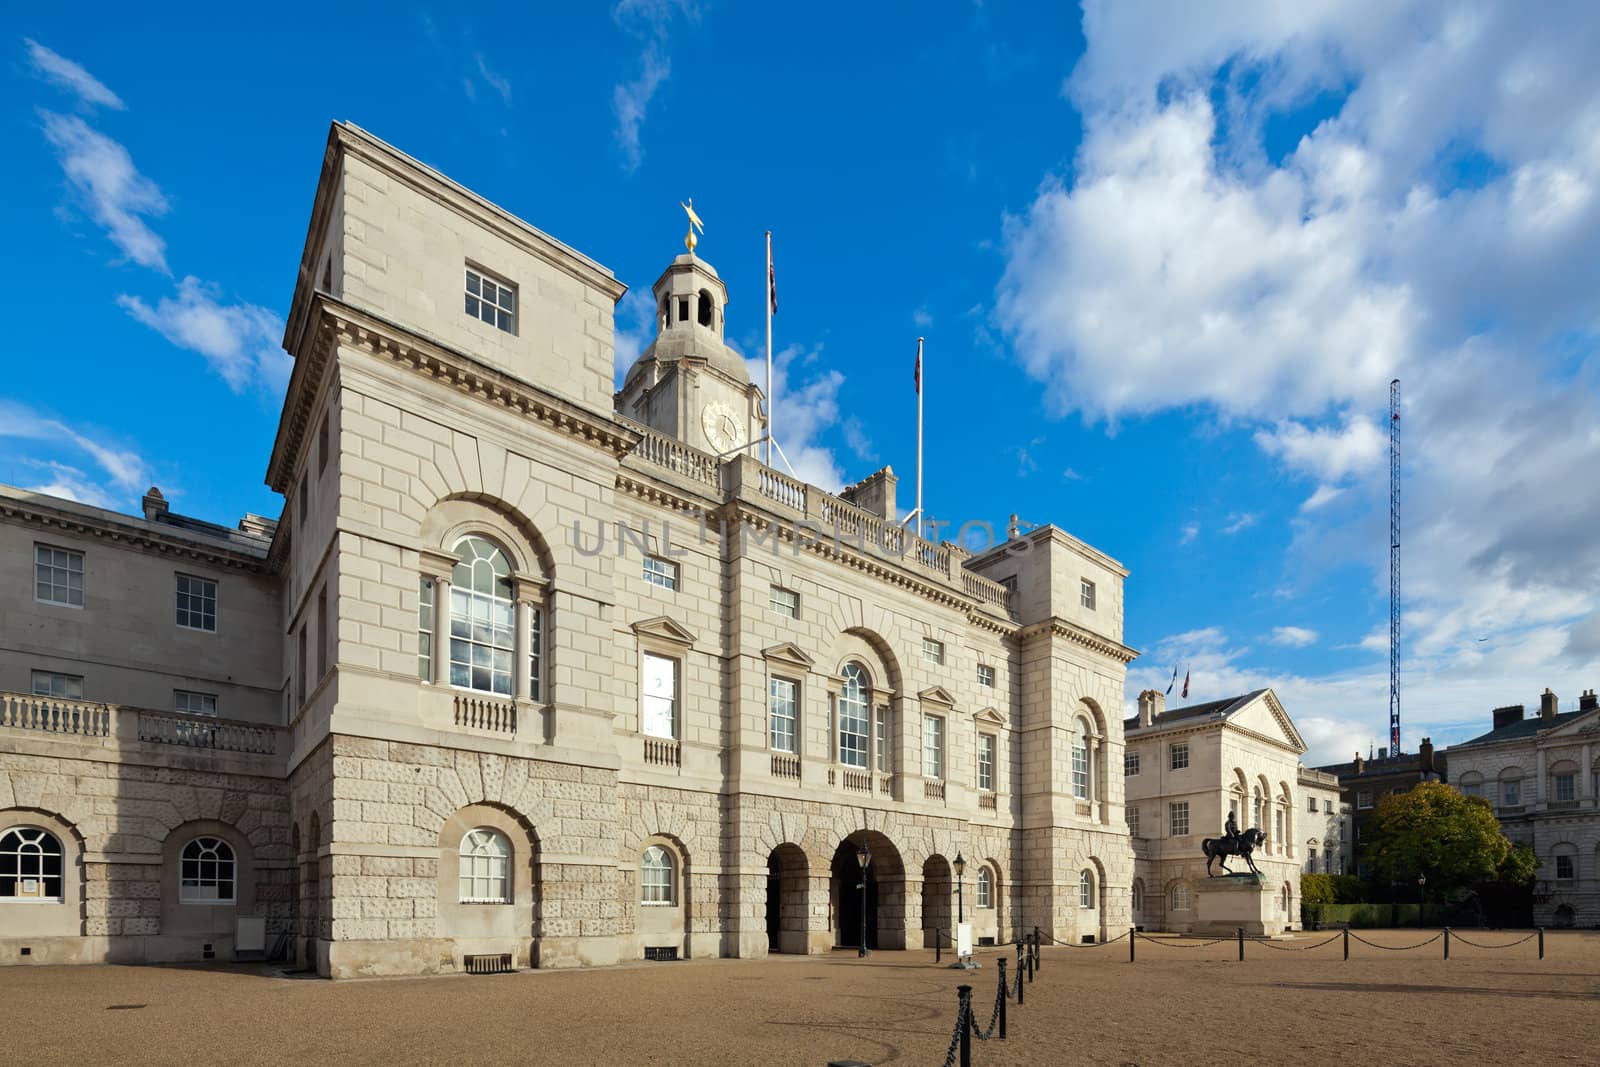  Horse Guards Parade buildings, London, UK by Antartis